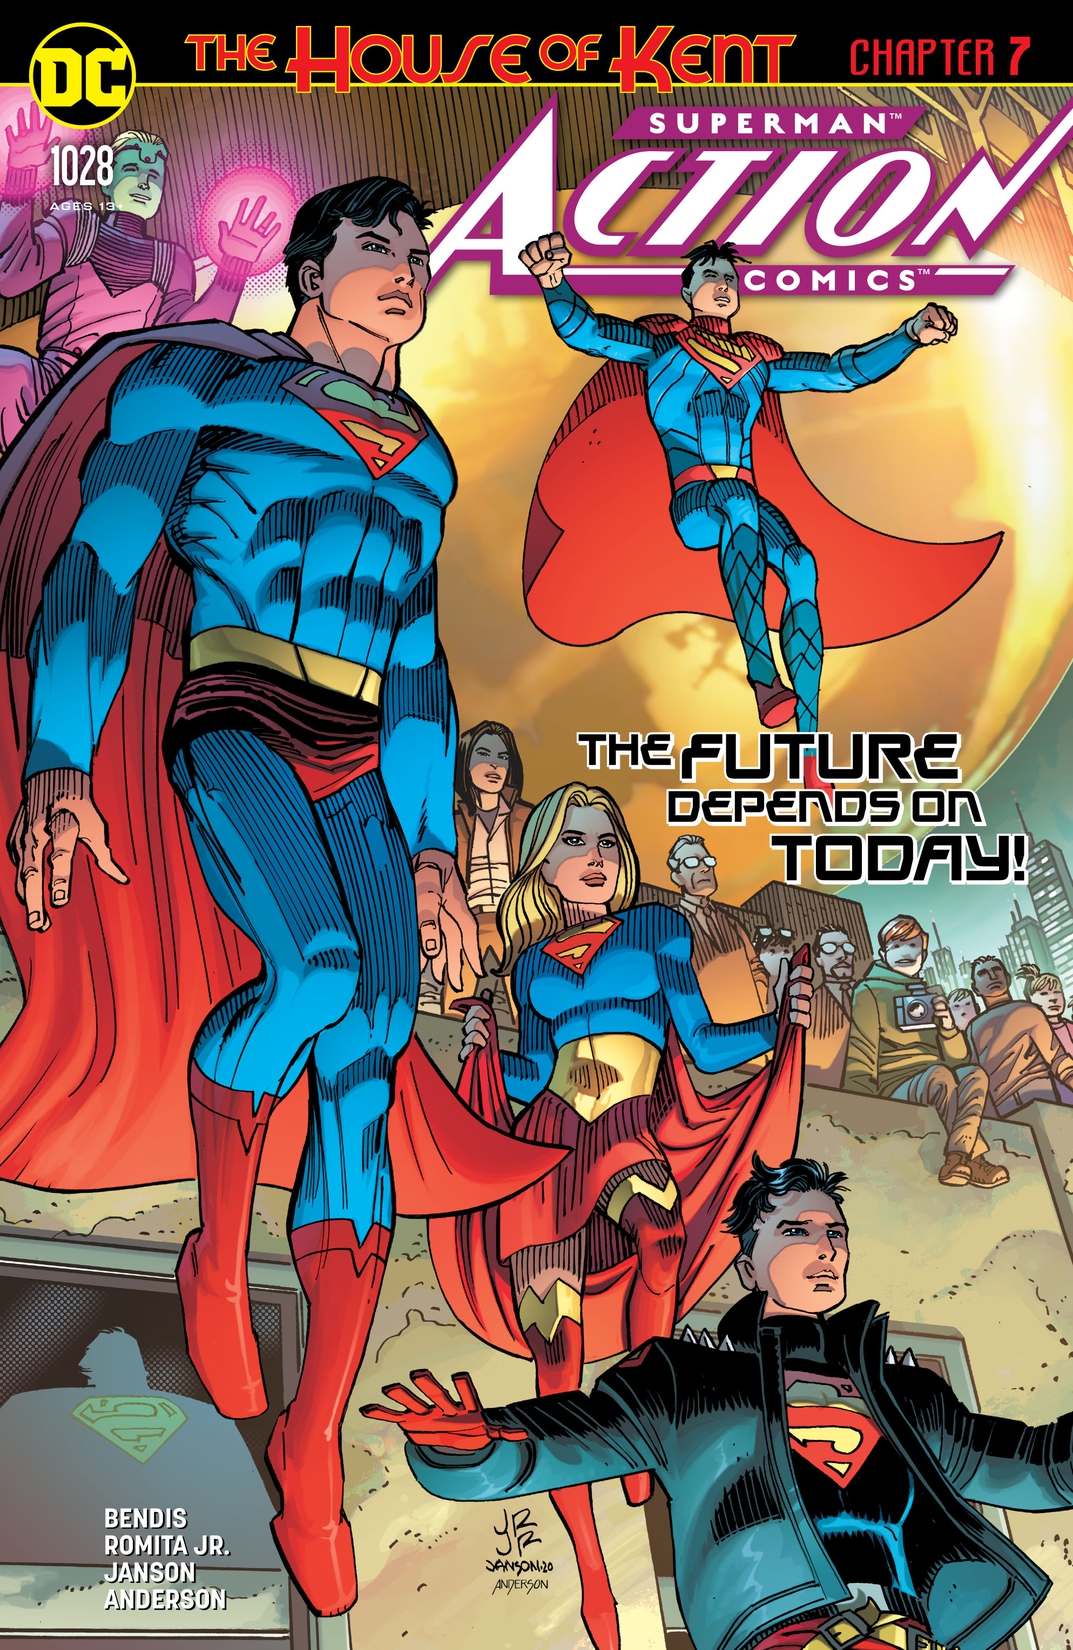 Action Comics (2016-) #1028 preview images